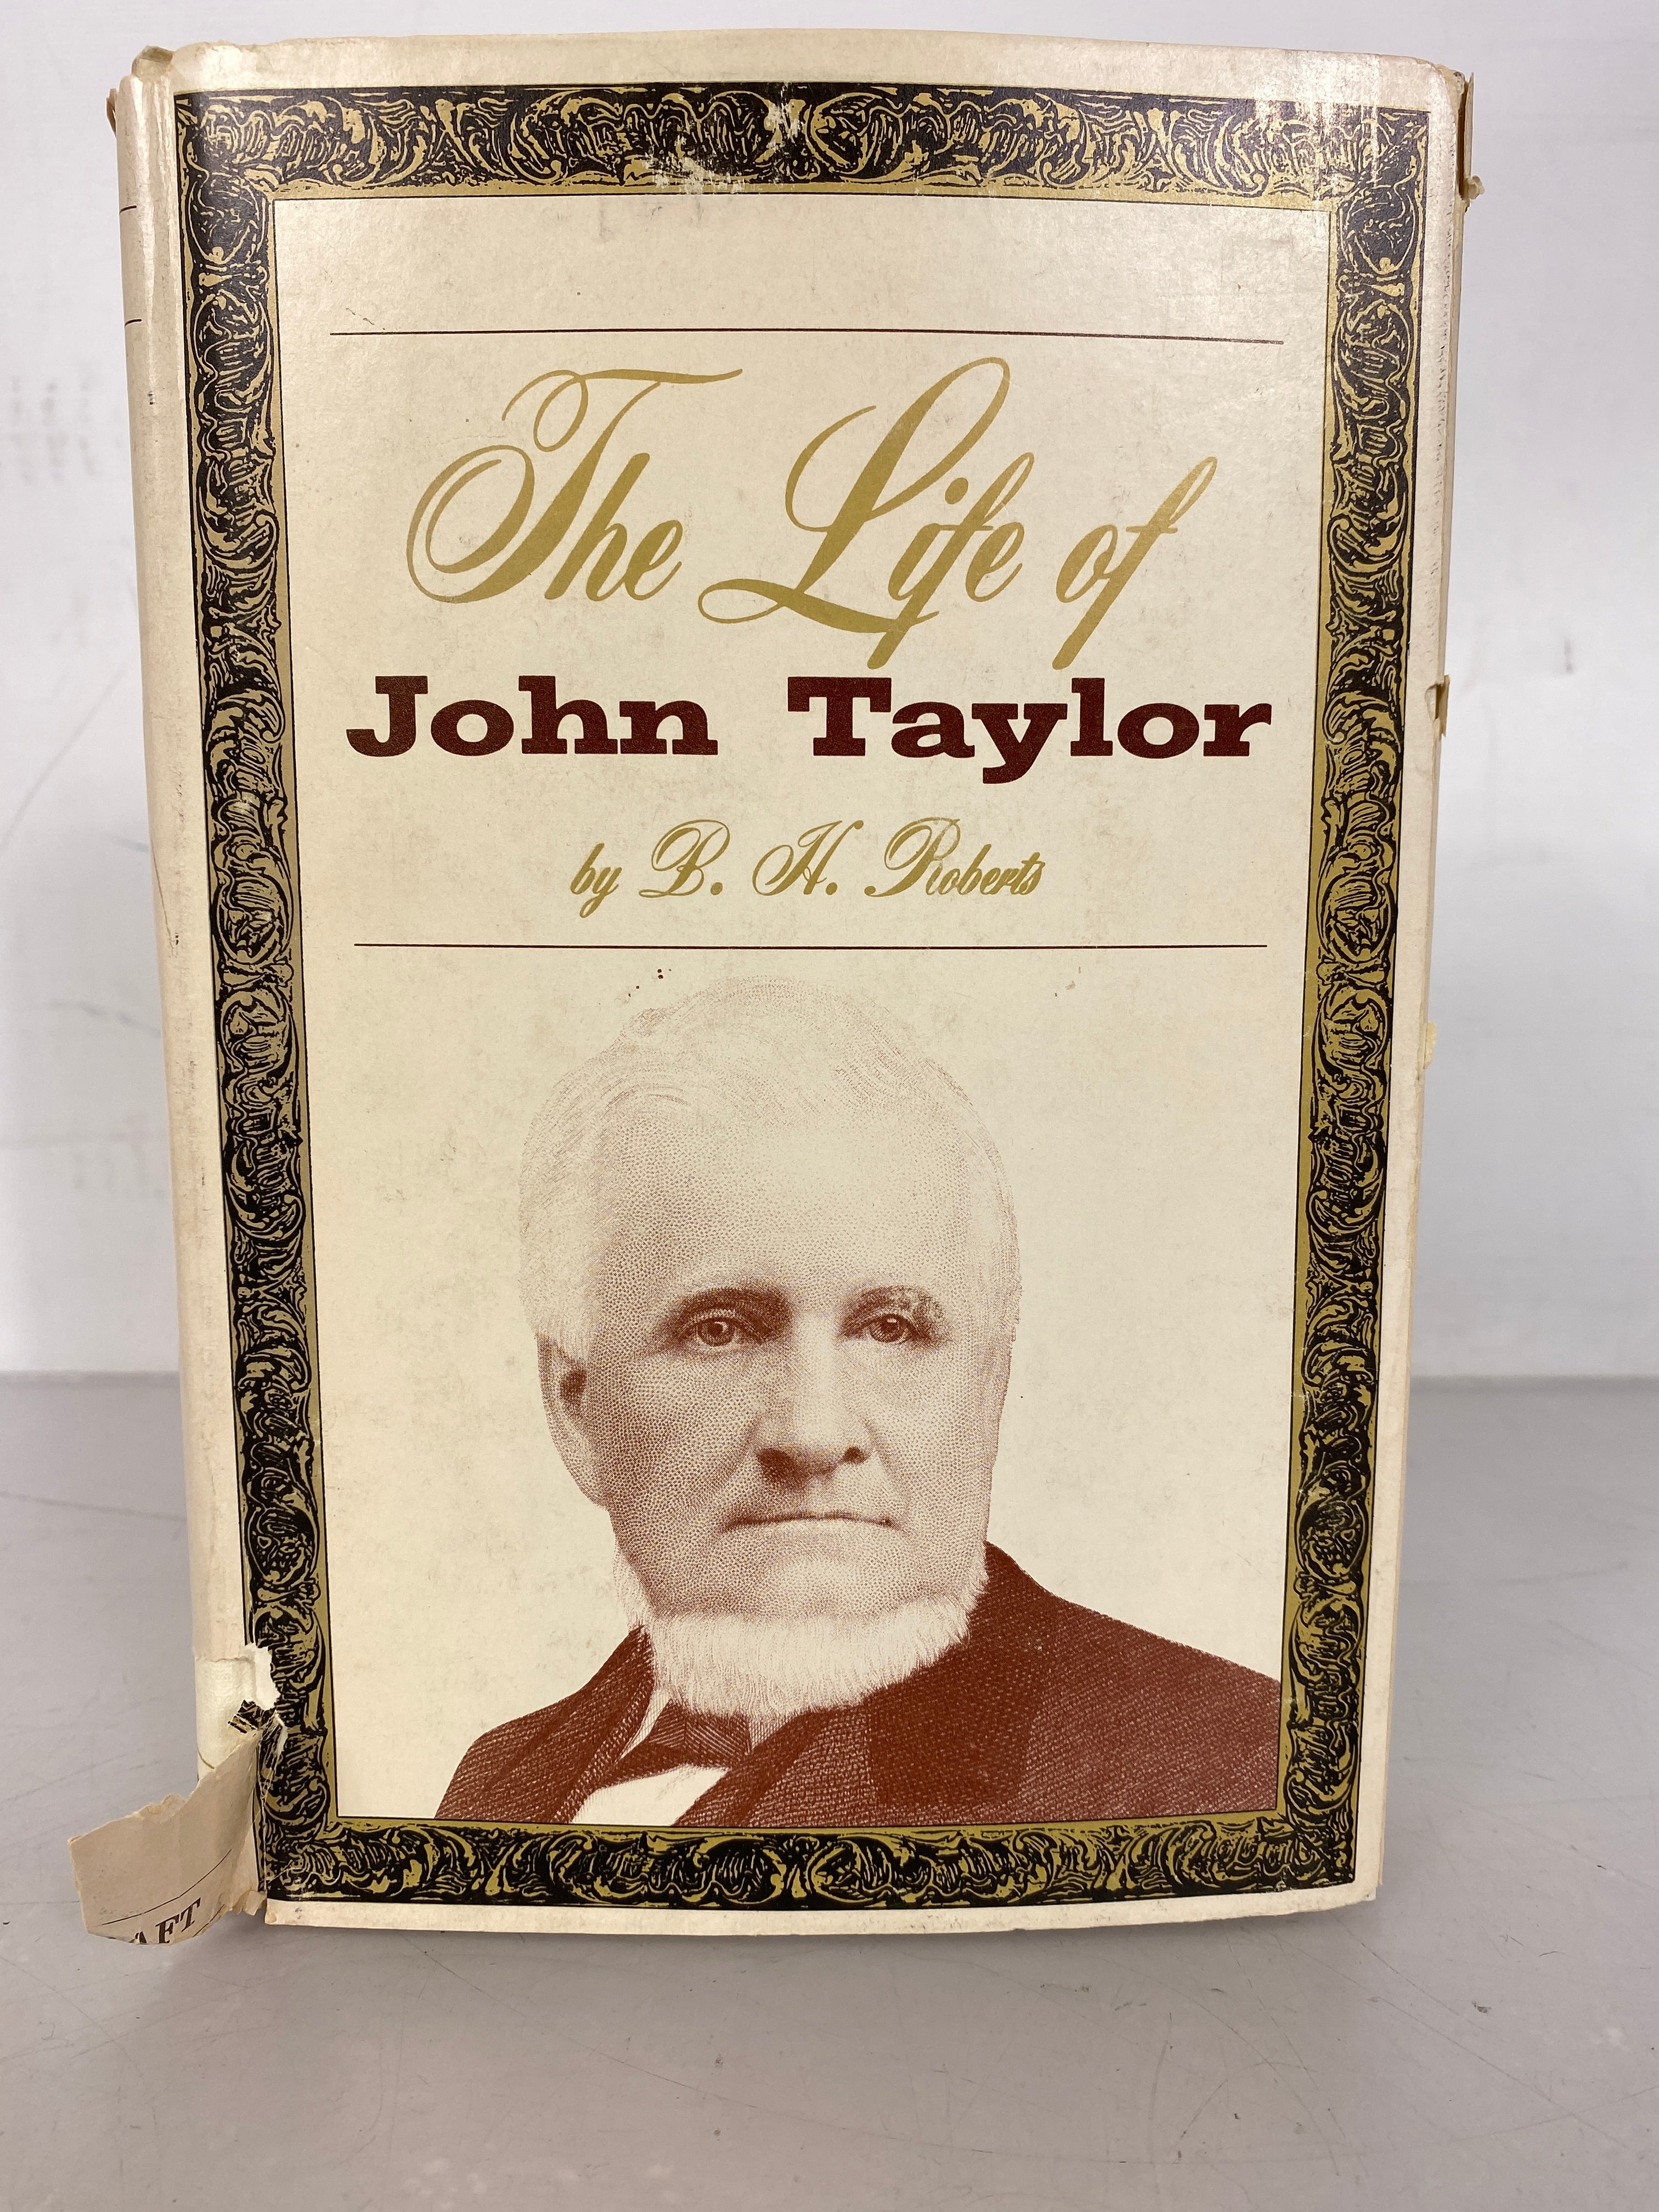 The Life of John Taylor by B.H. Roberts 1963 HC DJ